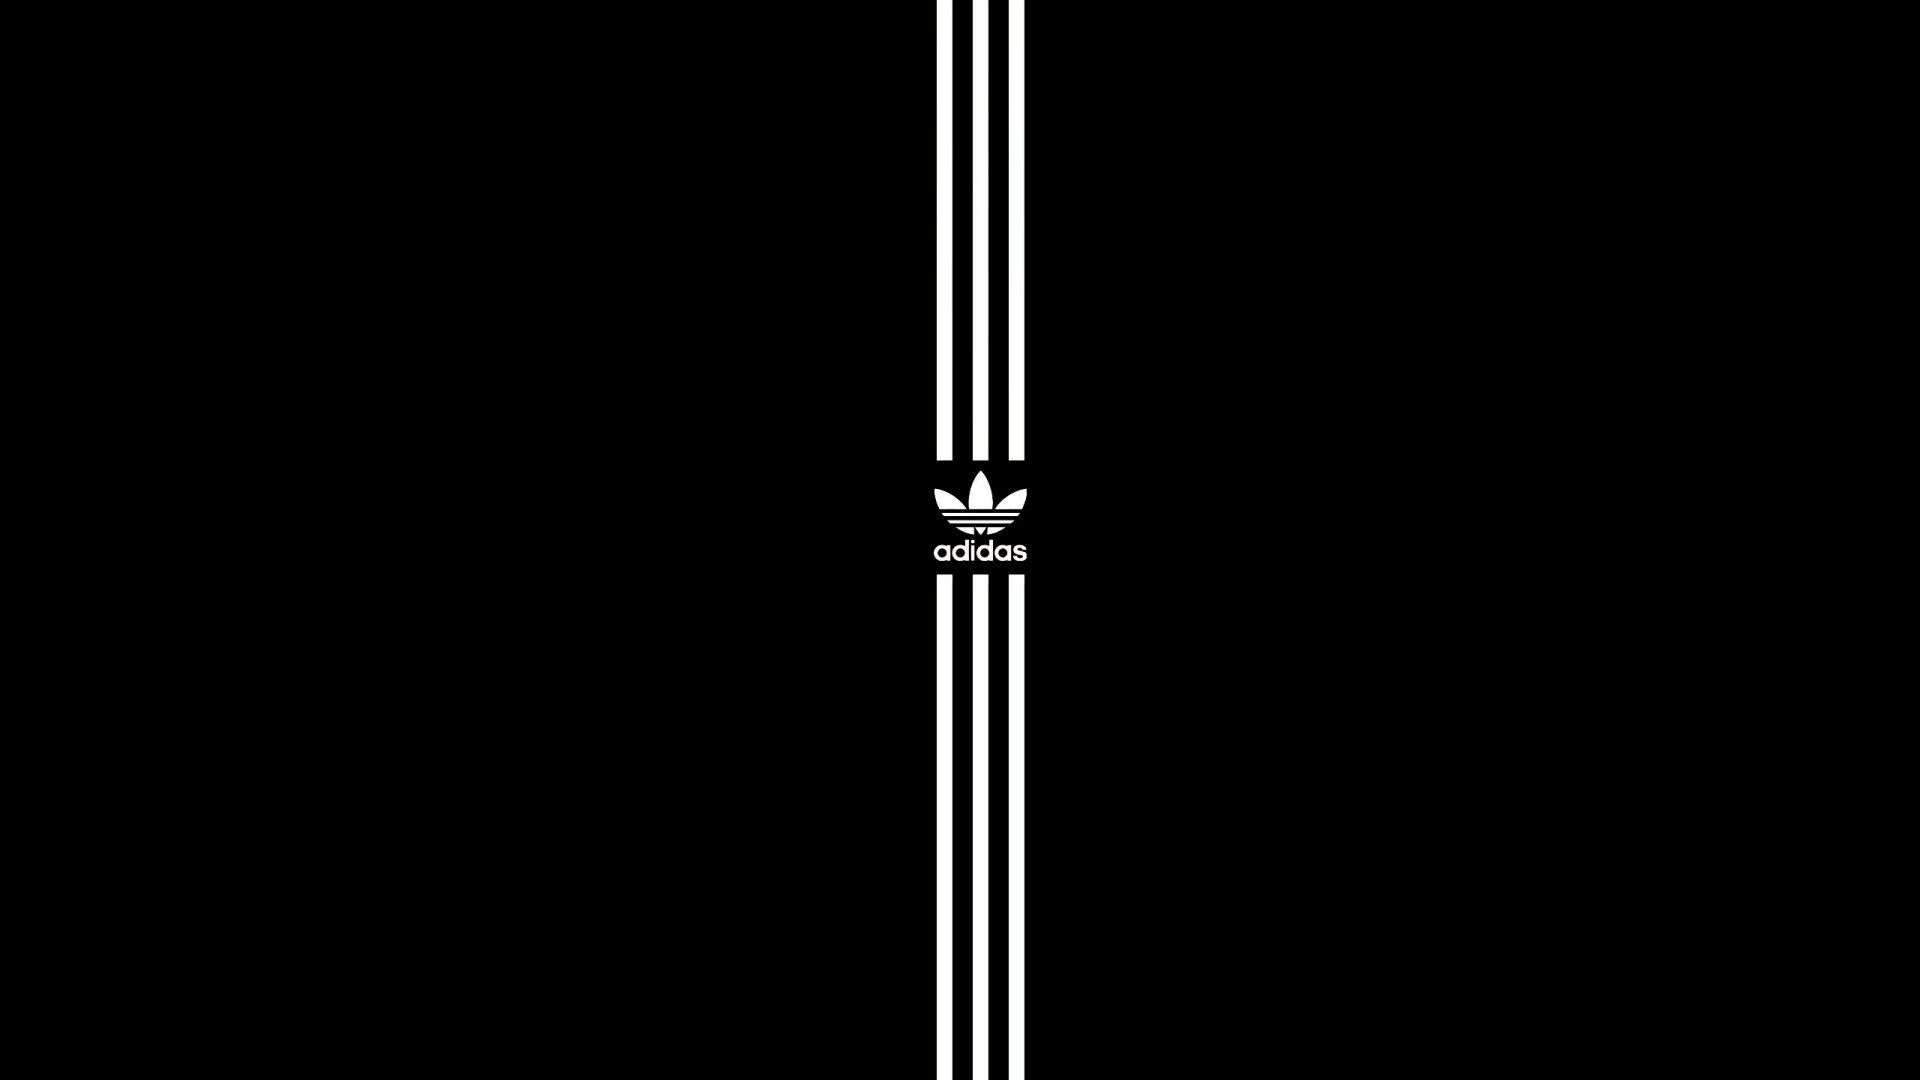 Adidas Stripe Iphone Wallpapers